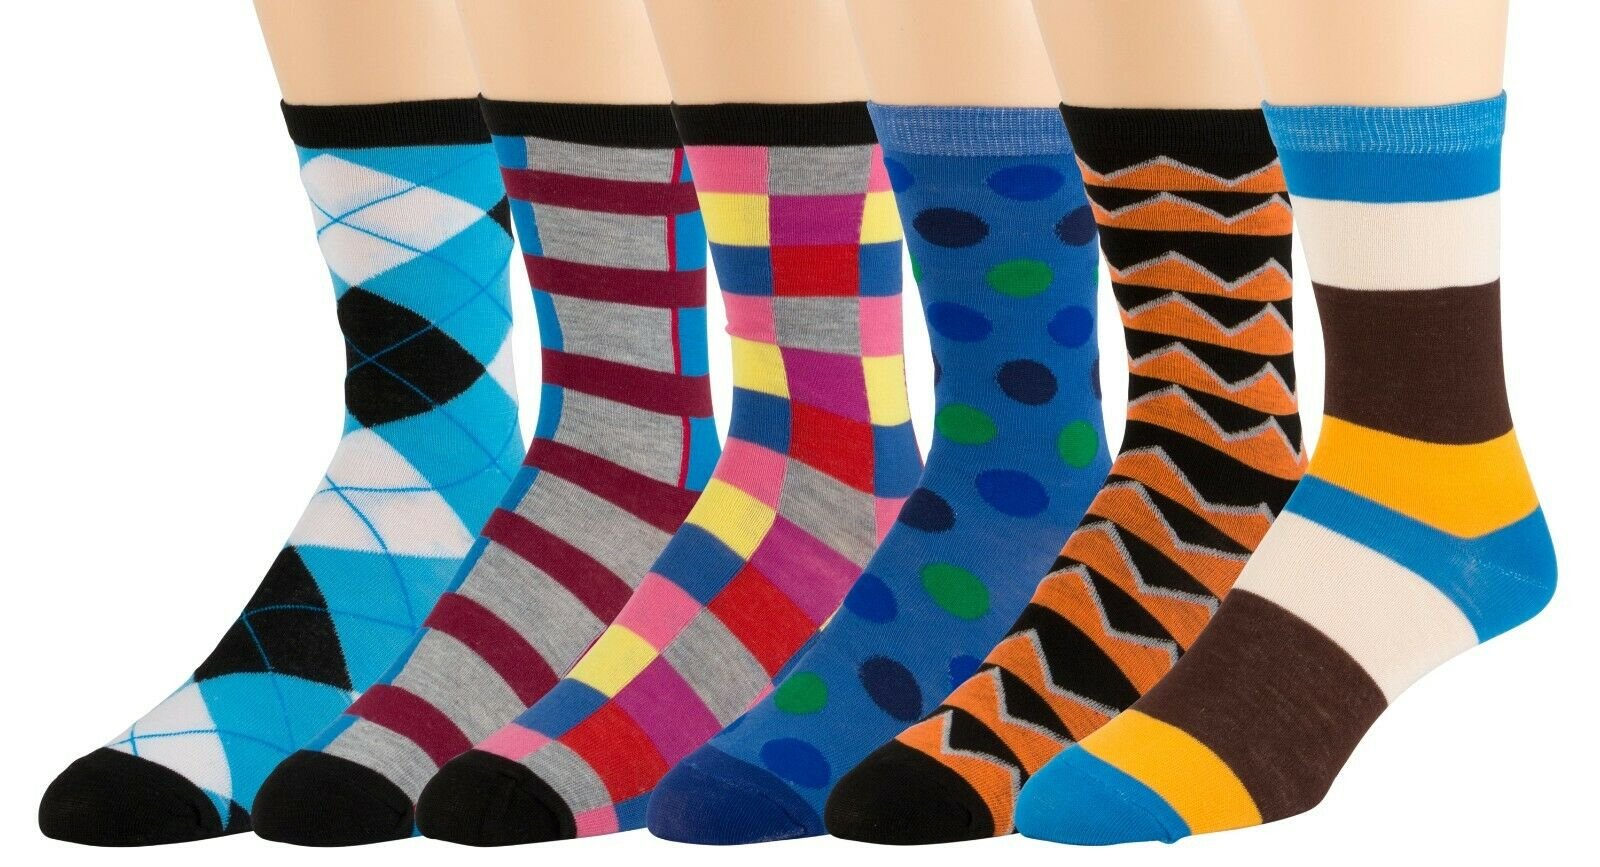 Zeke Mens Pattern Dress Funky Fun Colorful Socks 12 Assorted Patterns Size 10-13 